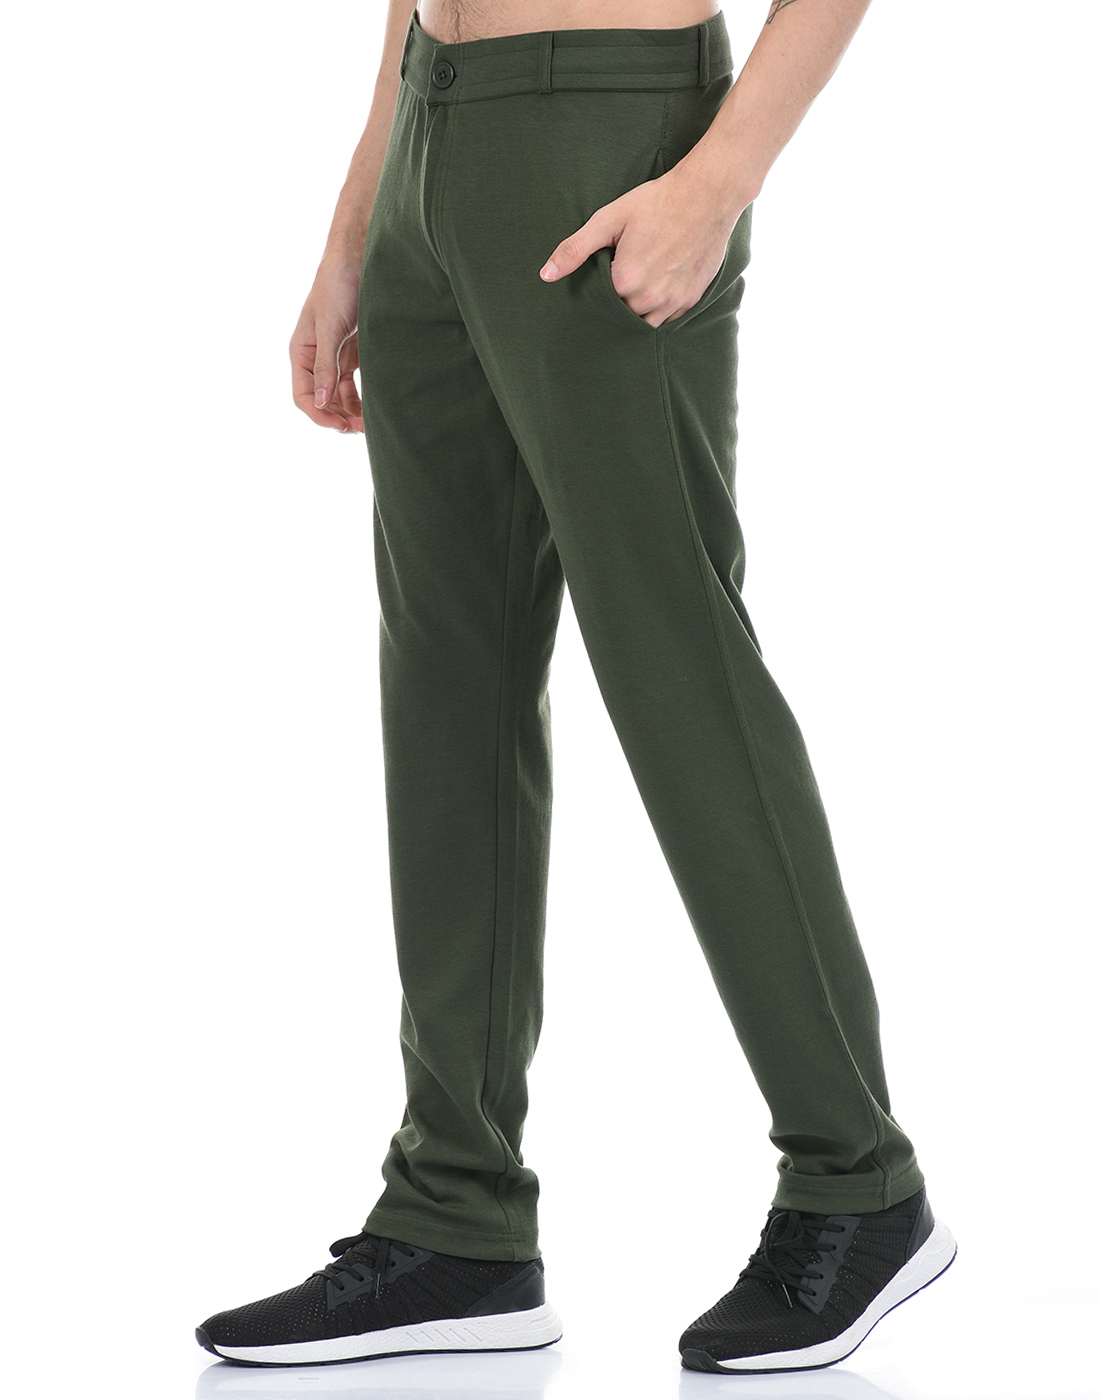 Buy Men's Green Trousers Online at Bewakoof